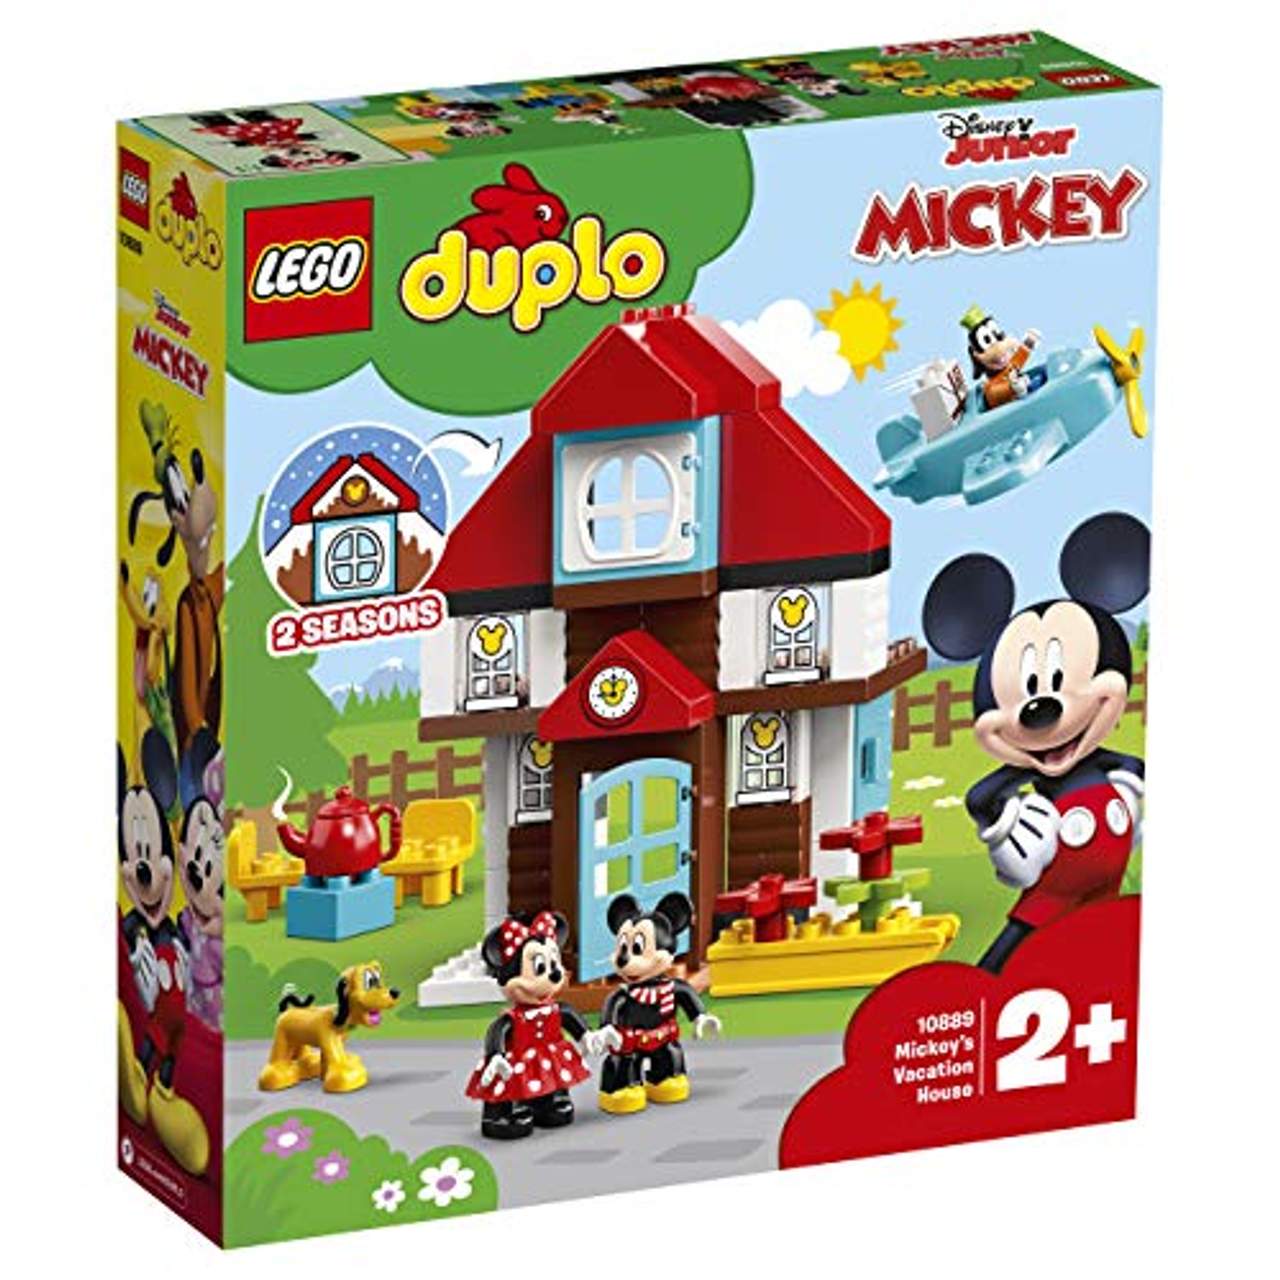 LEGO Duplo Disney 10889